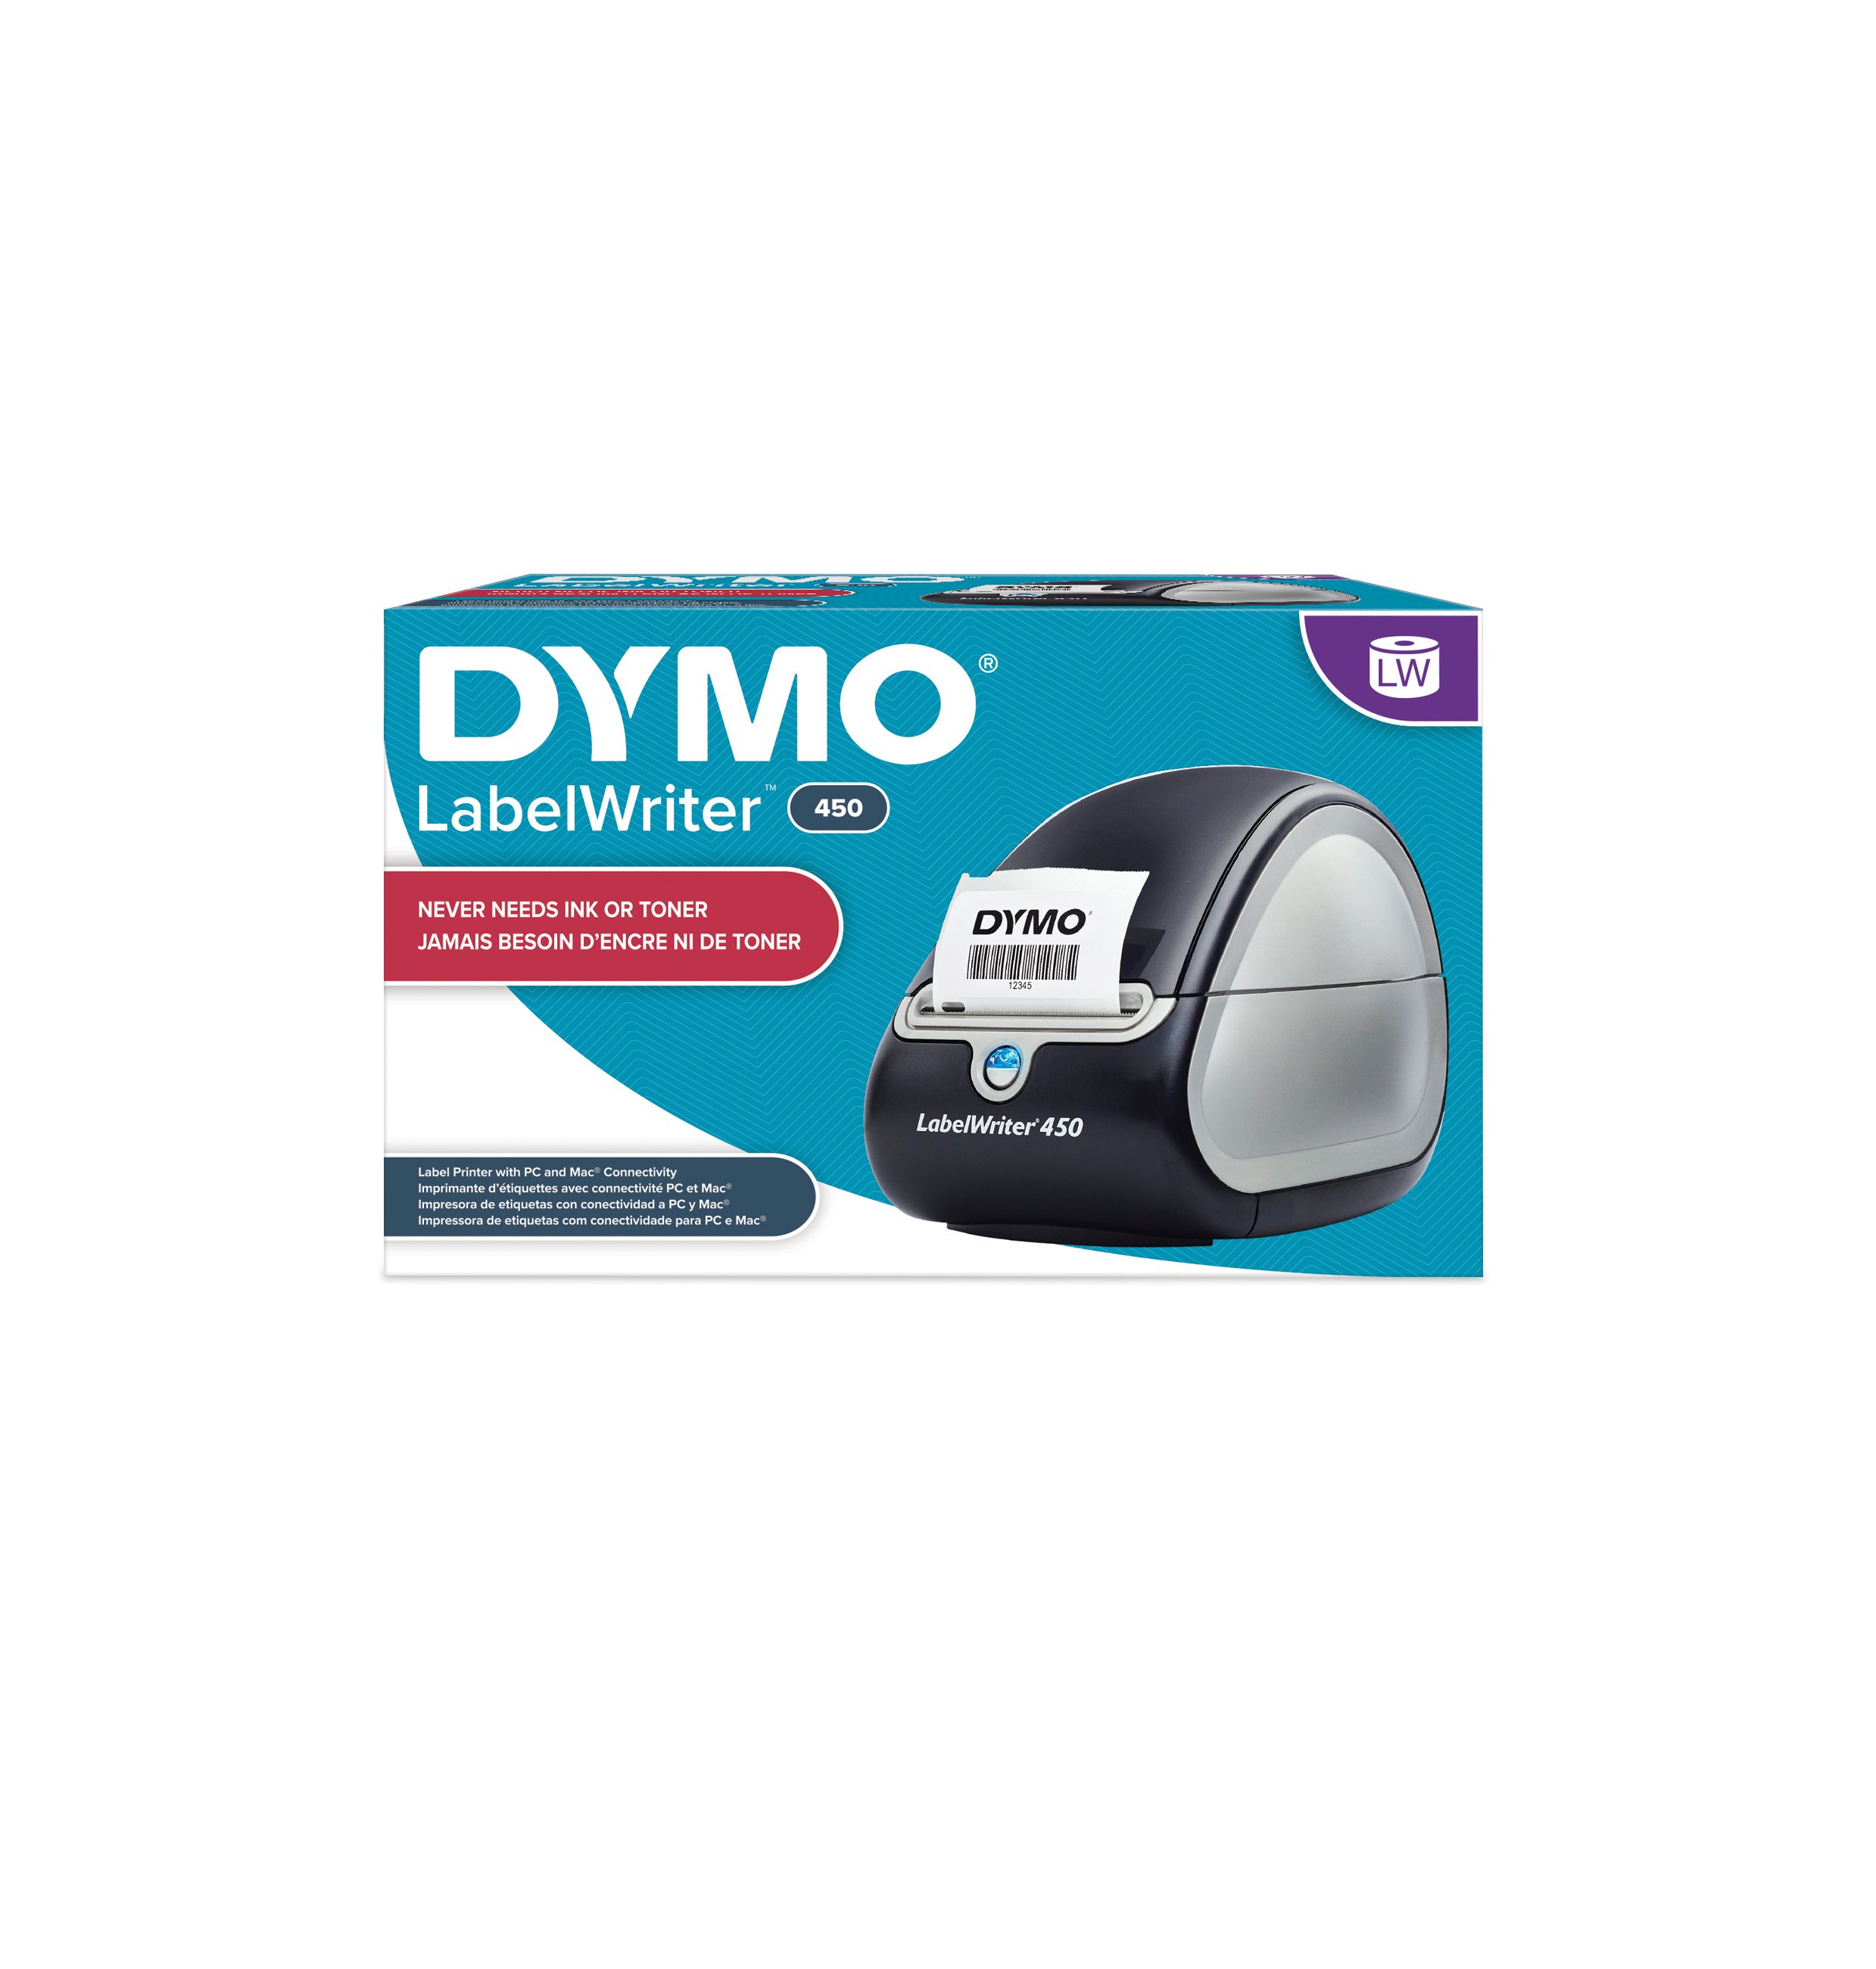 DYMO Power adapter for DYMO LabelWriter 450 - Office Depot